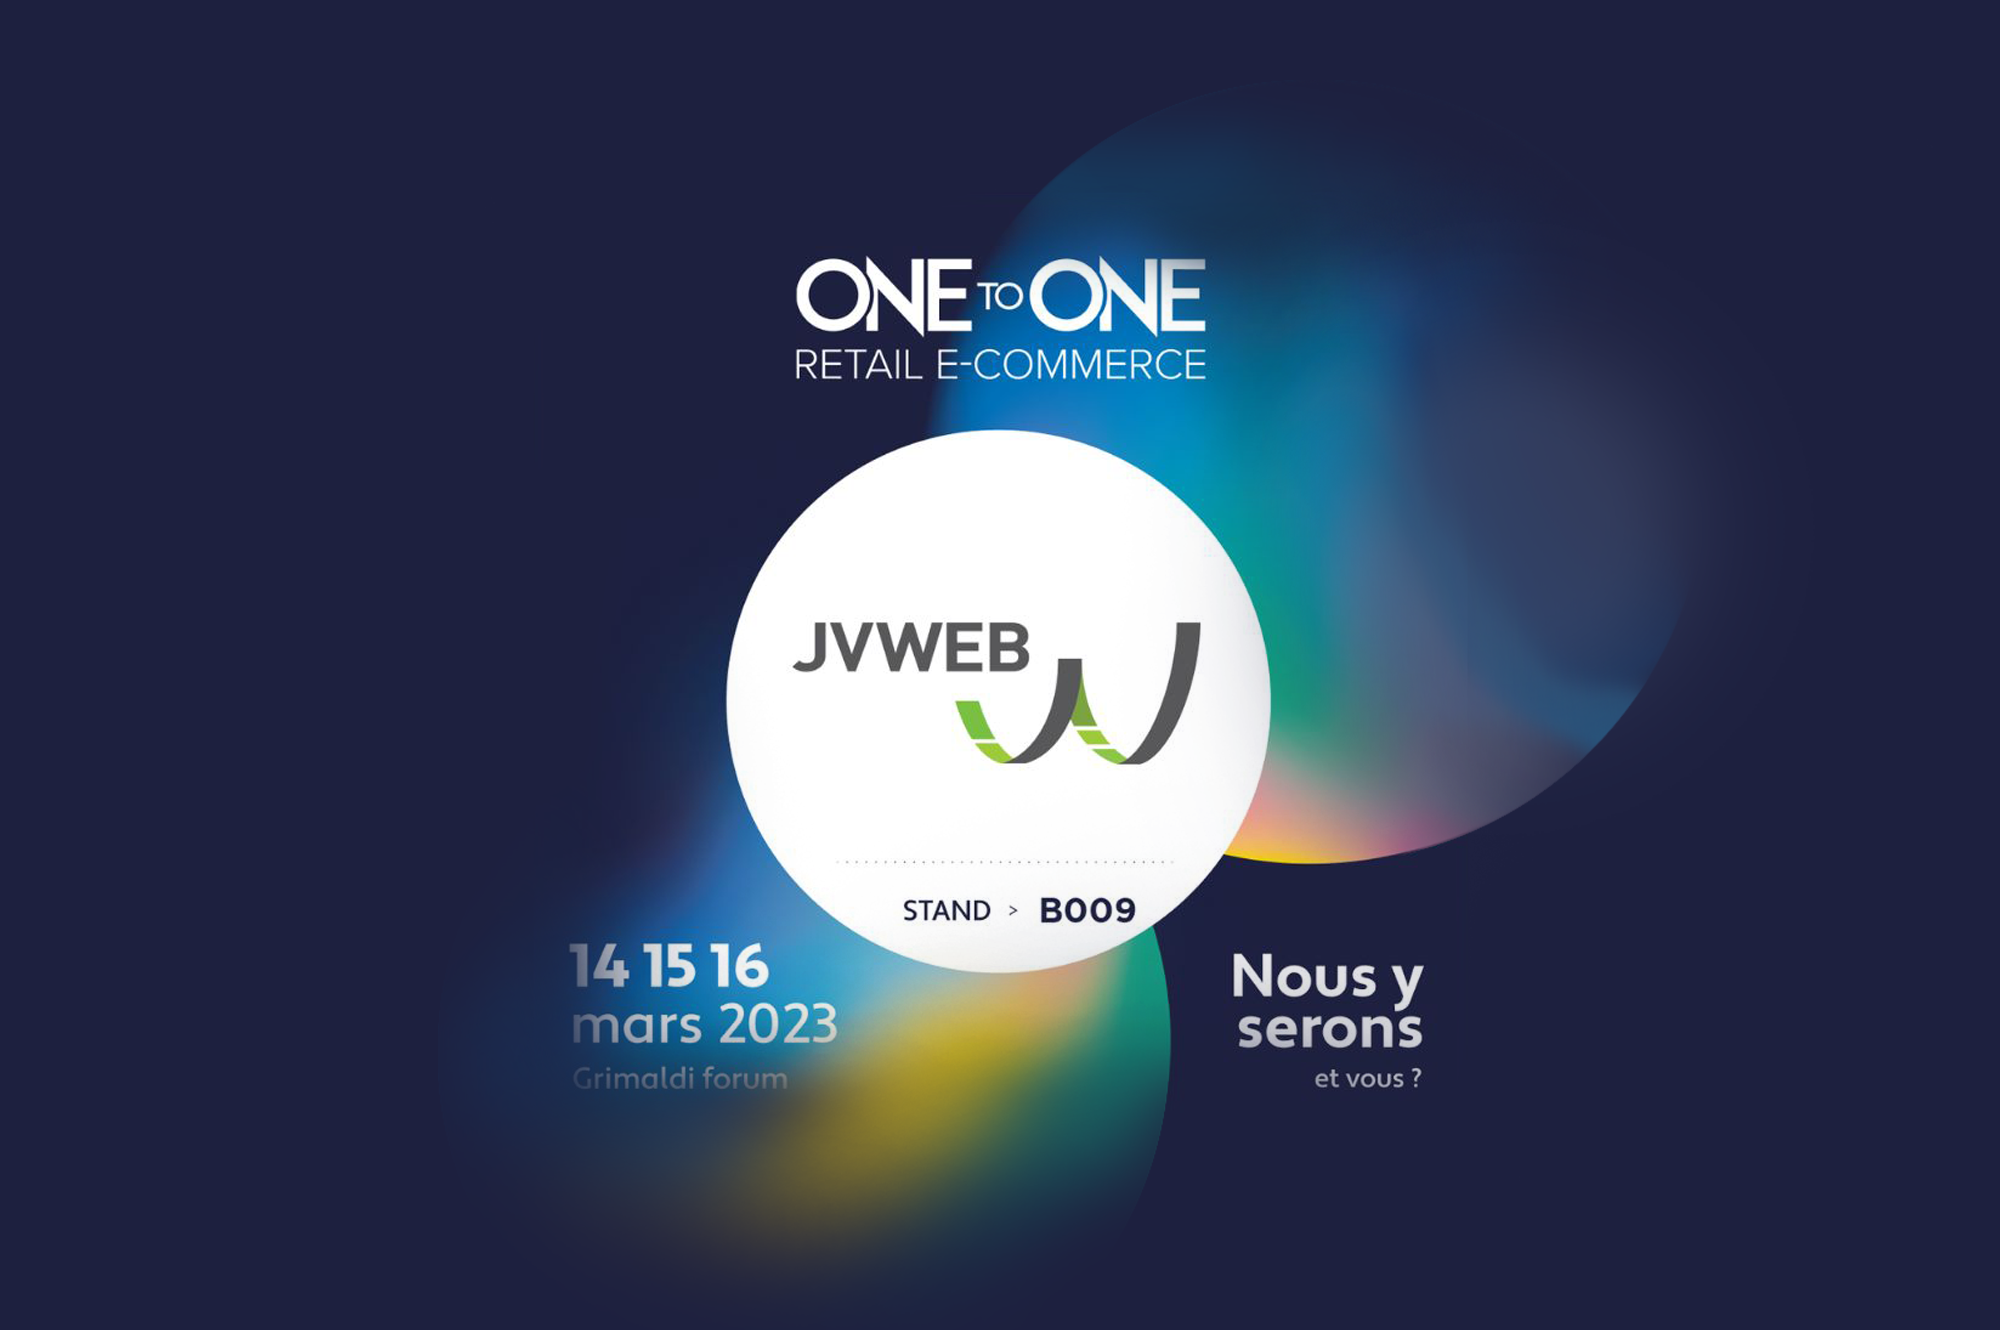 [EVENEMENT] JVWEB au One to One Monaco (Mars 2023)